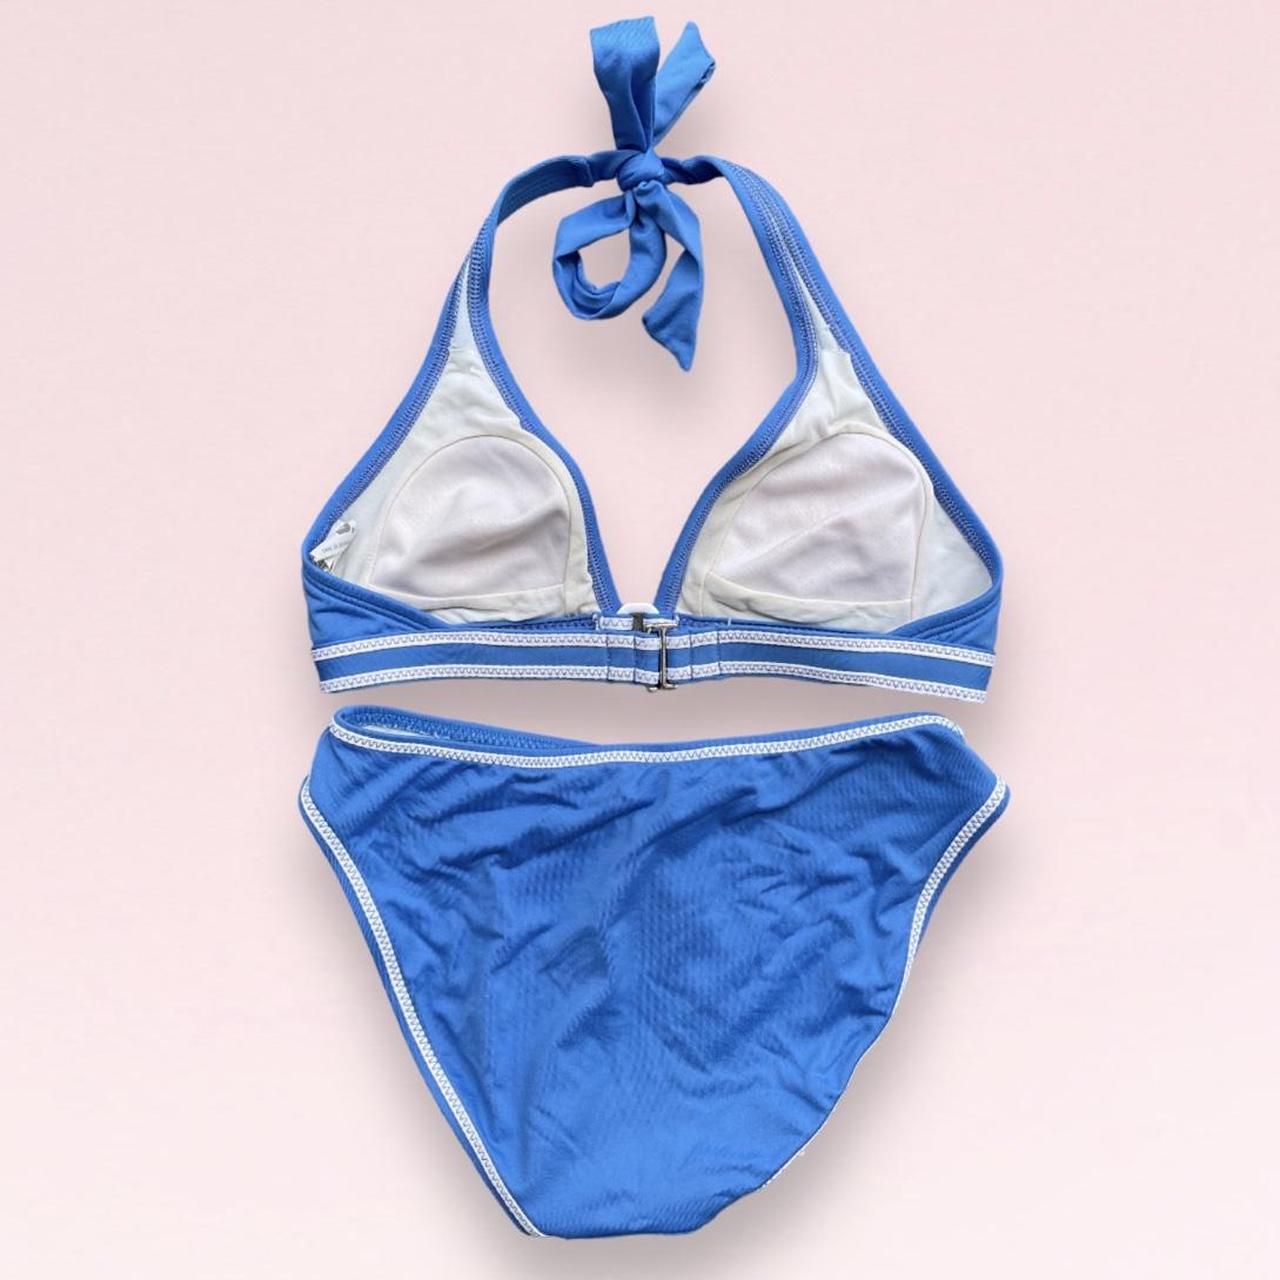 JAG Women's Blue and White Bikinis-and-tankini-sets (4)